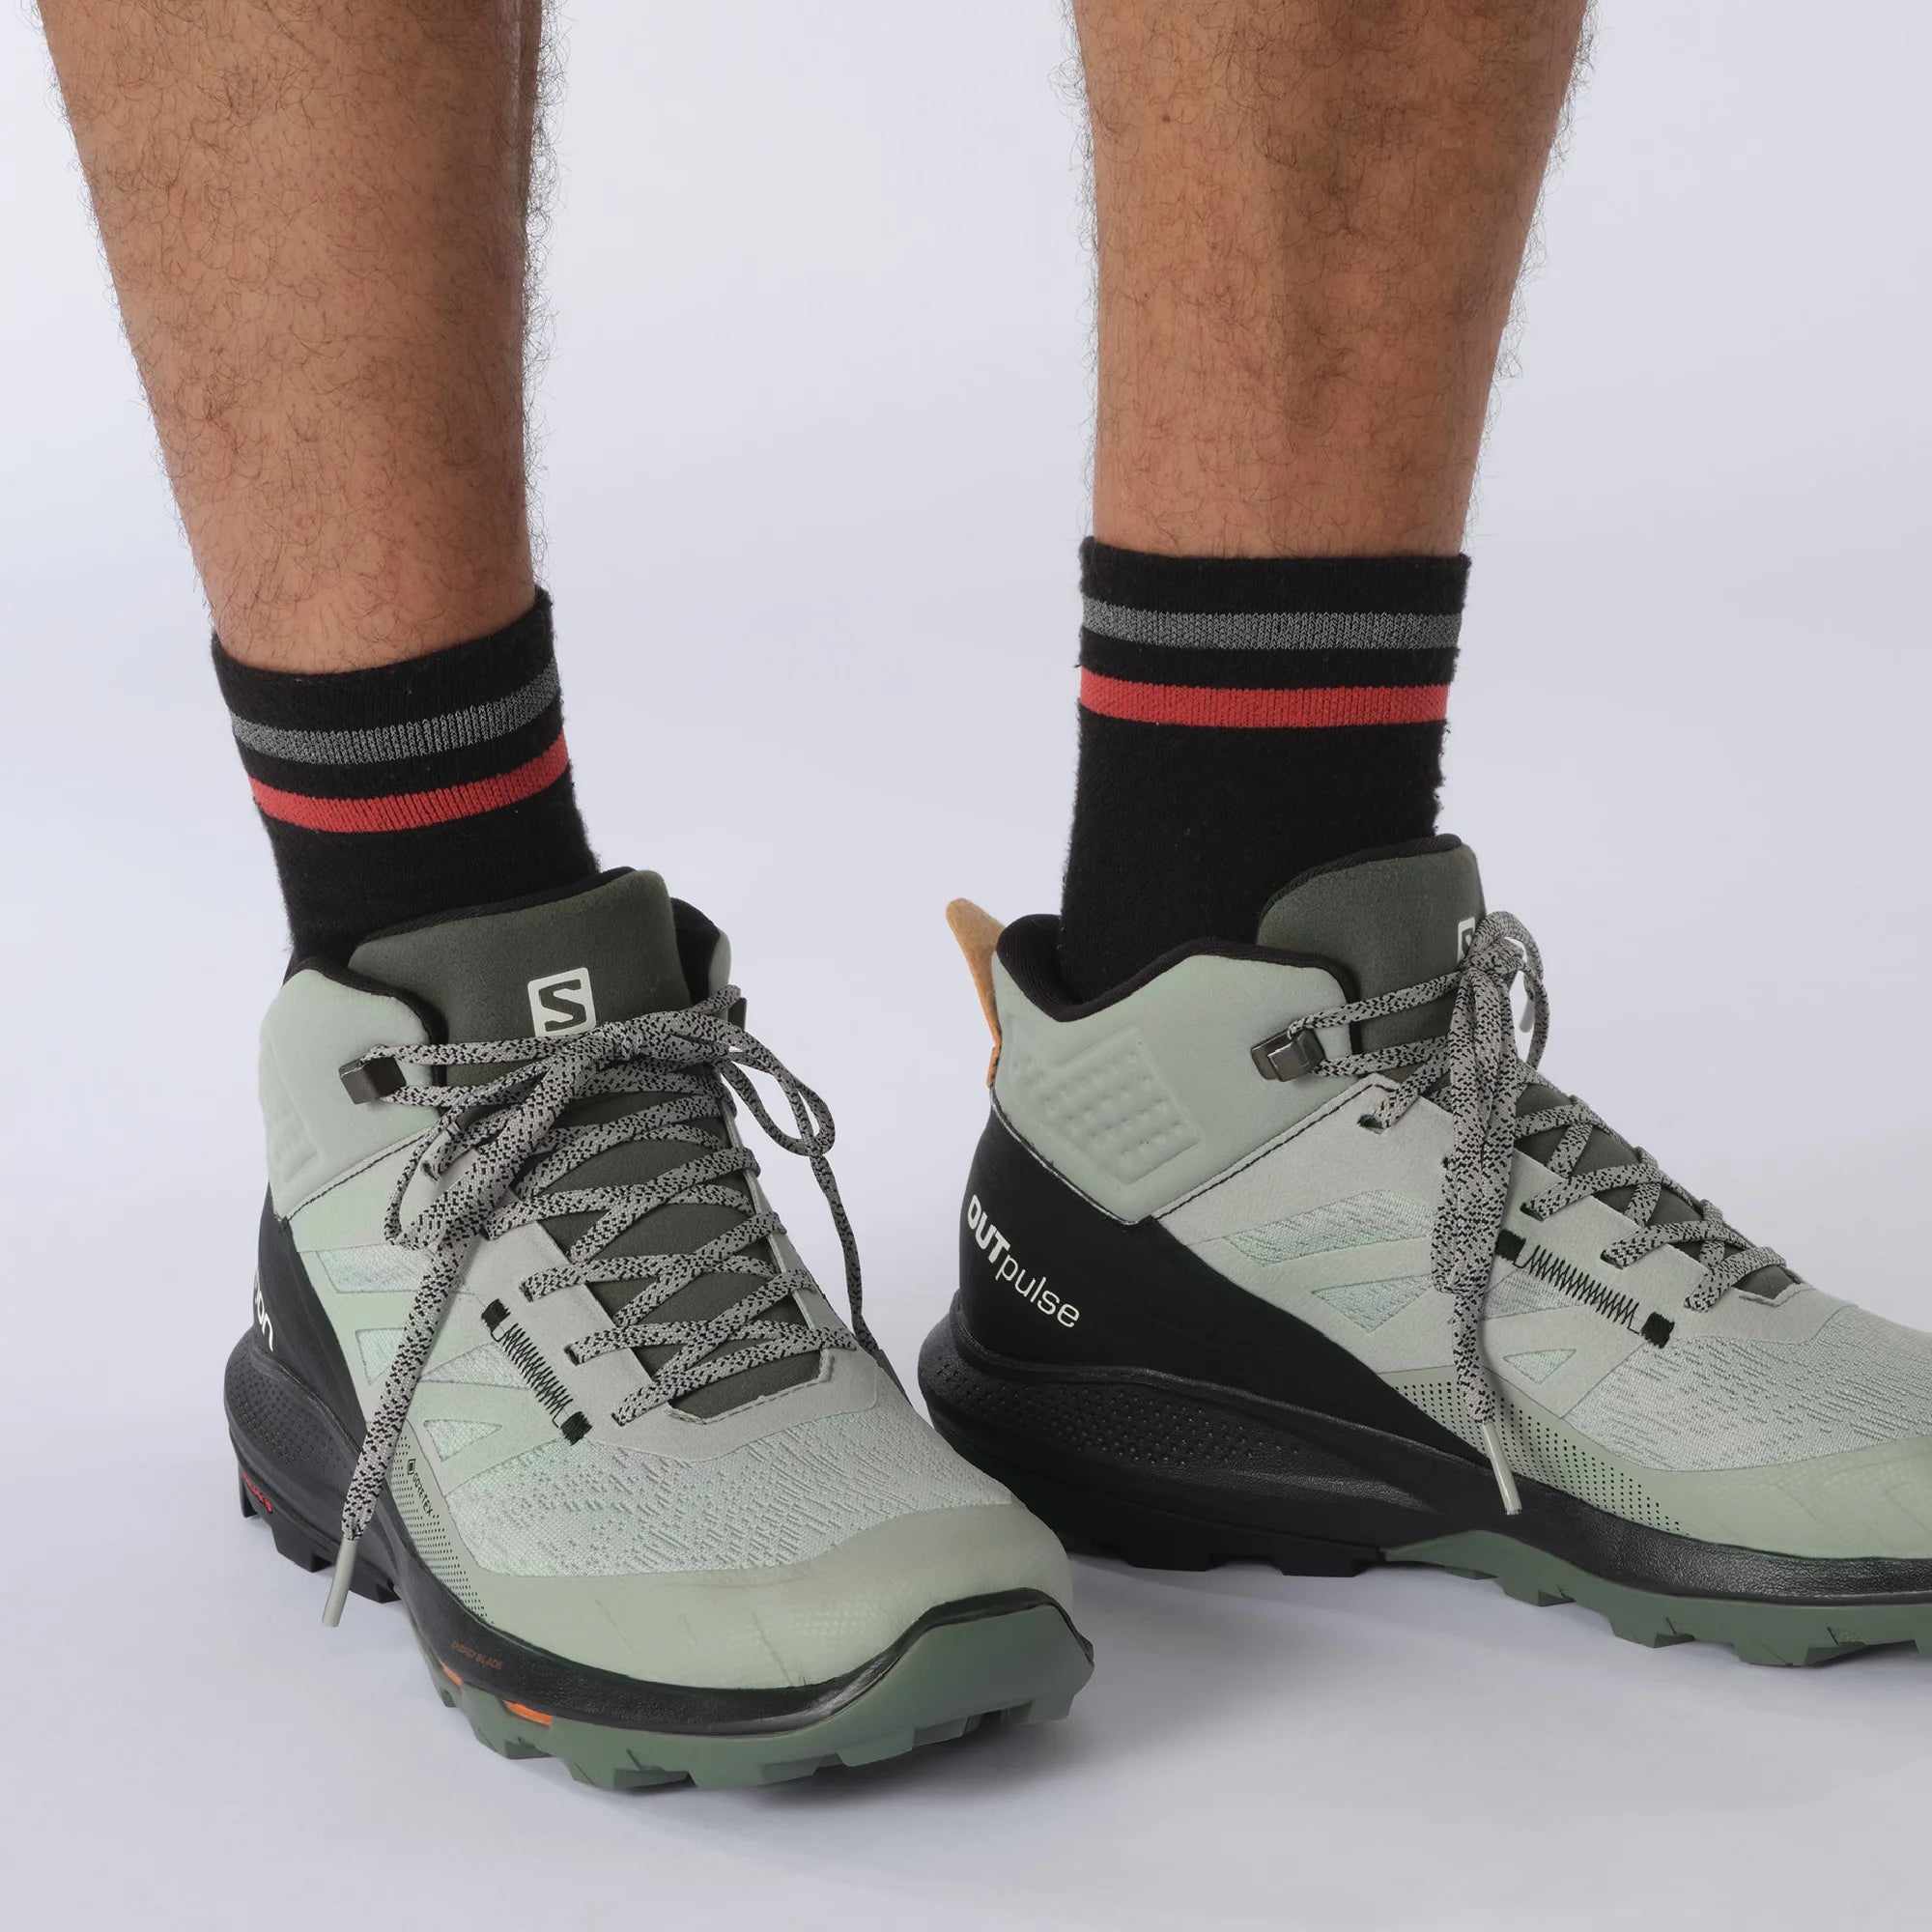 Men's Salomon Outpulse GORE-TEX® Hiking Shoe